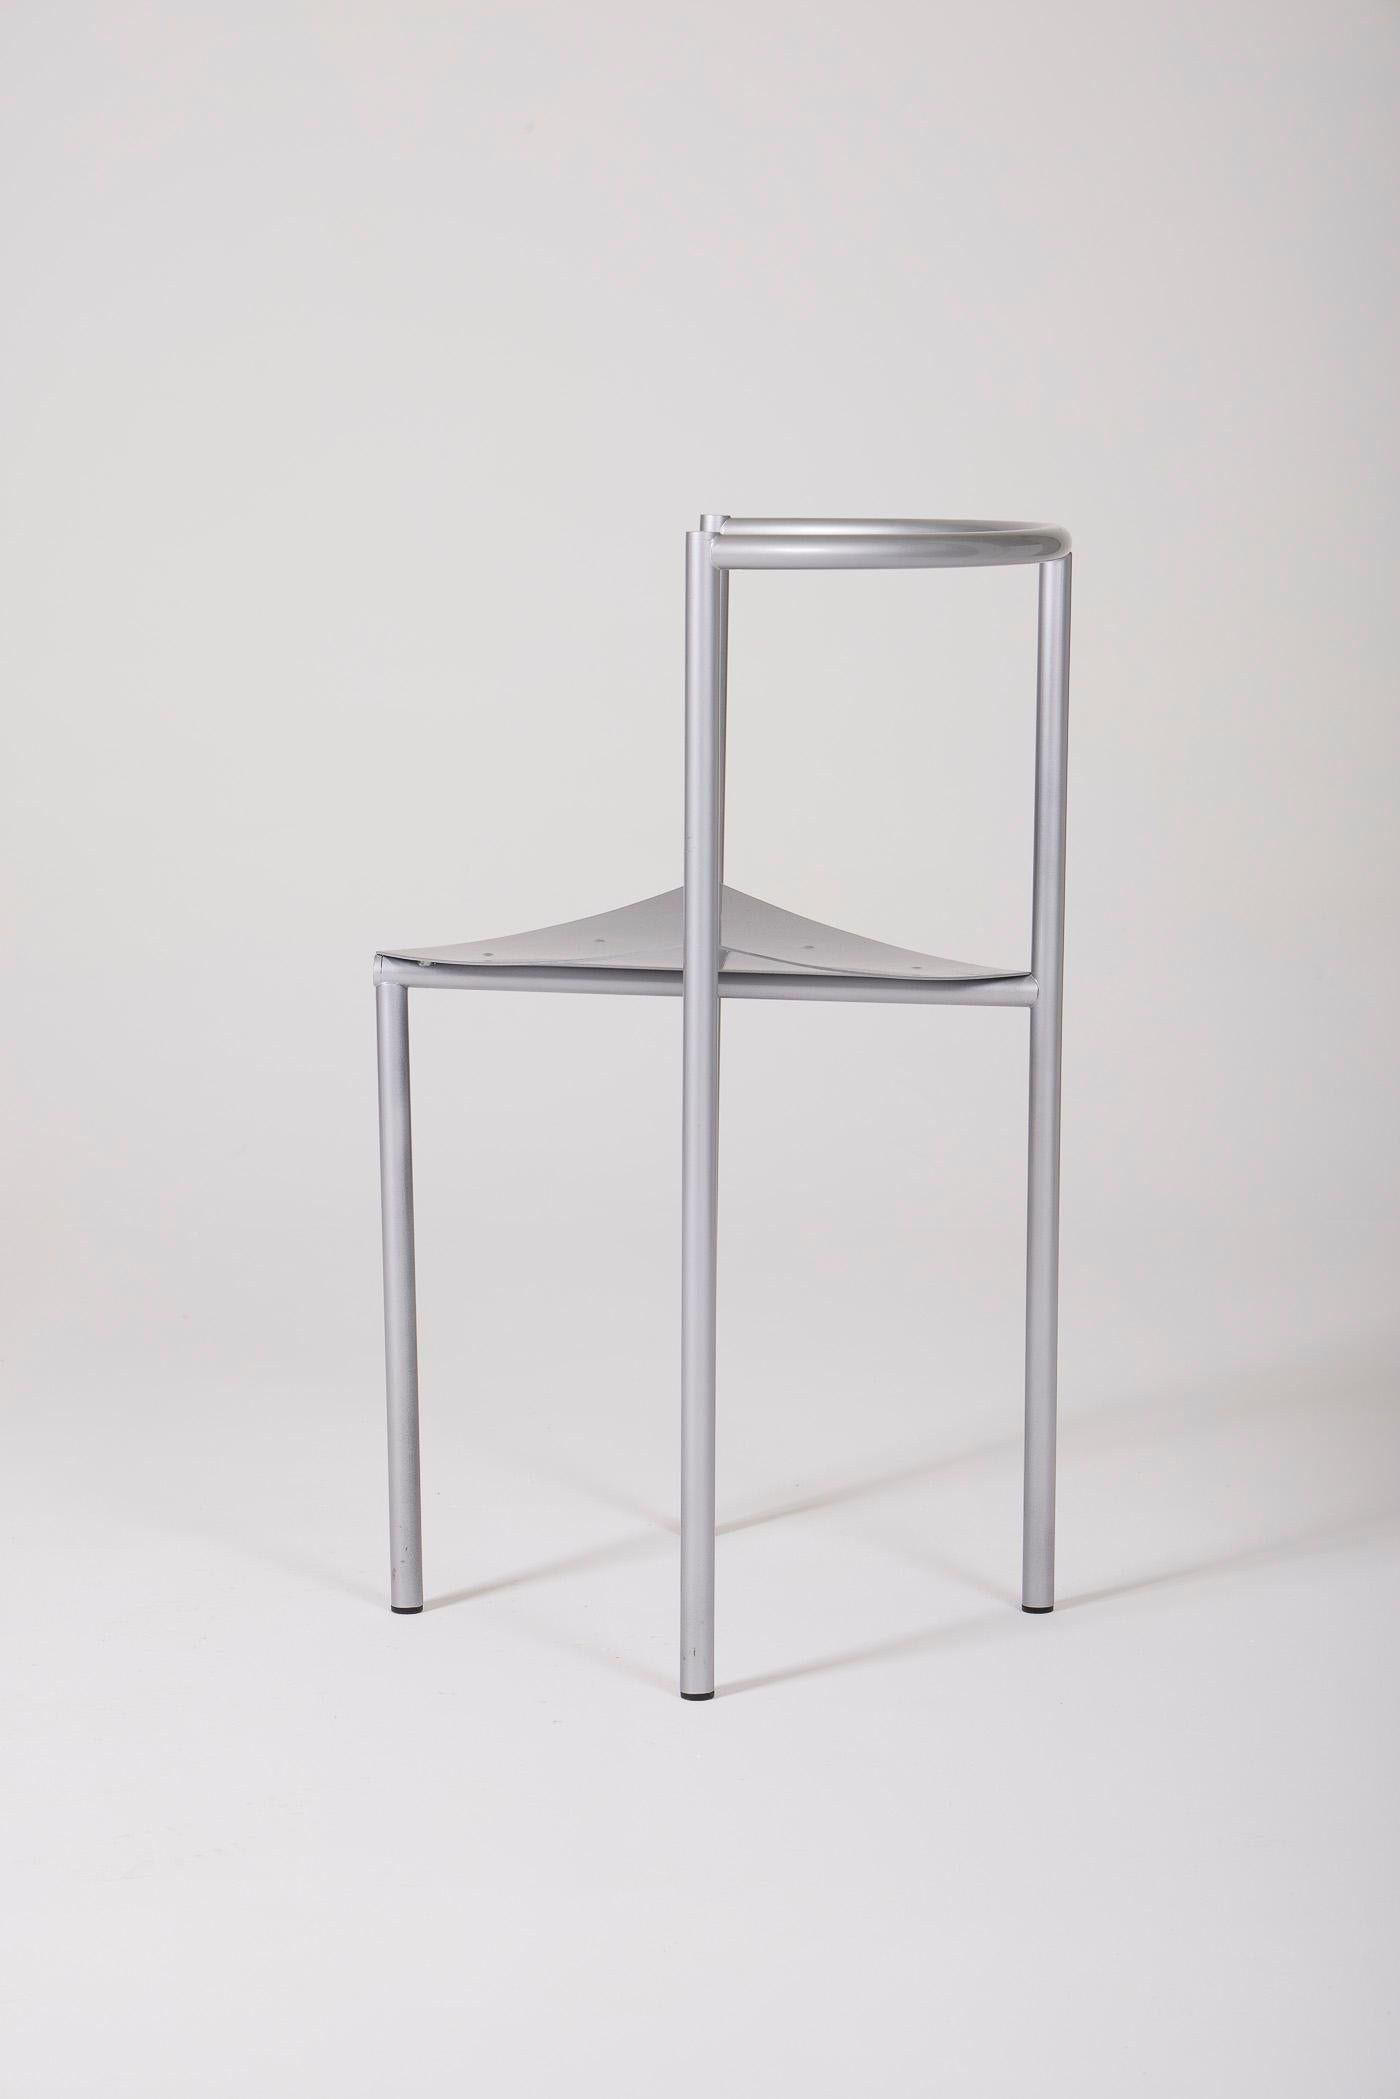 Modern Philippe Starck chair